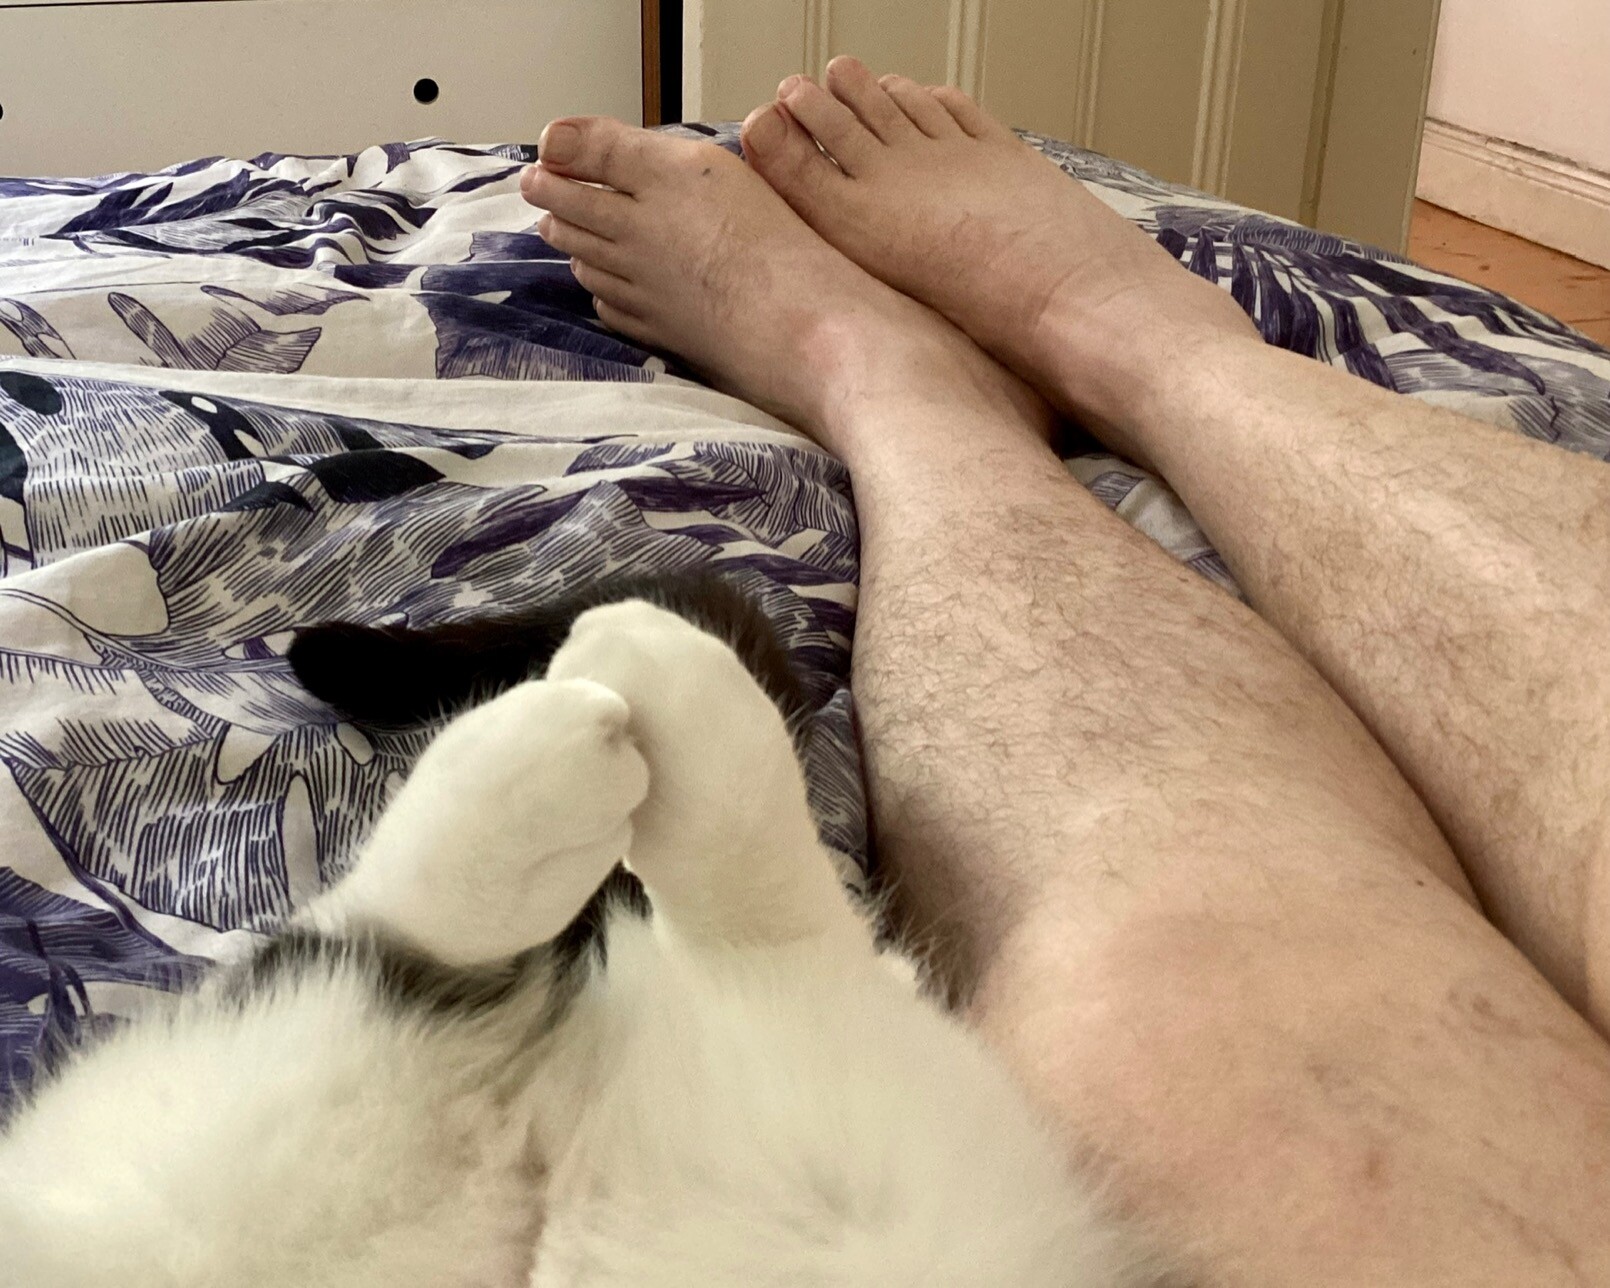 2 white furry cat legs resting beside 2 hairy people legs